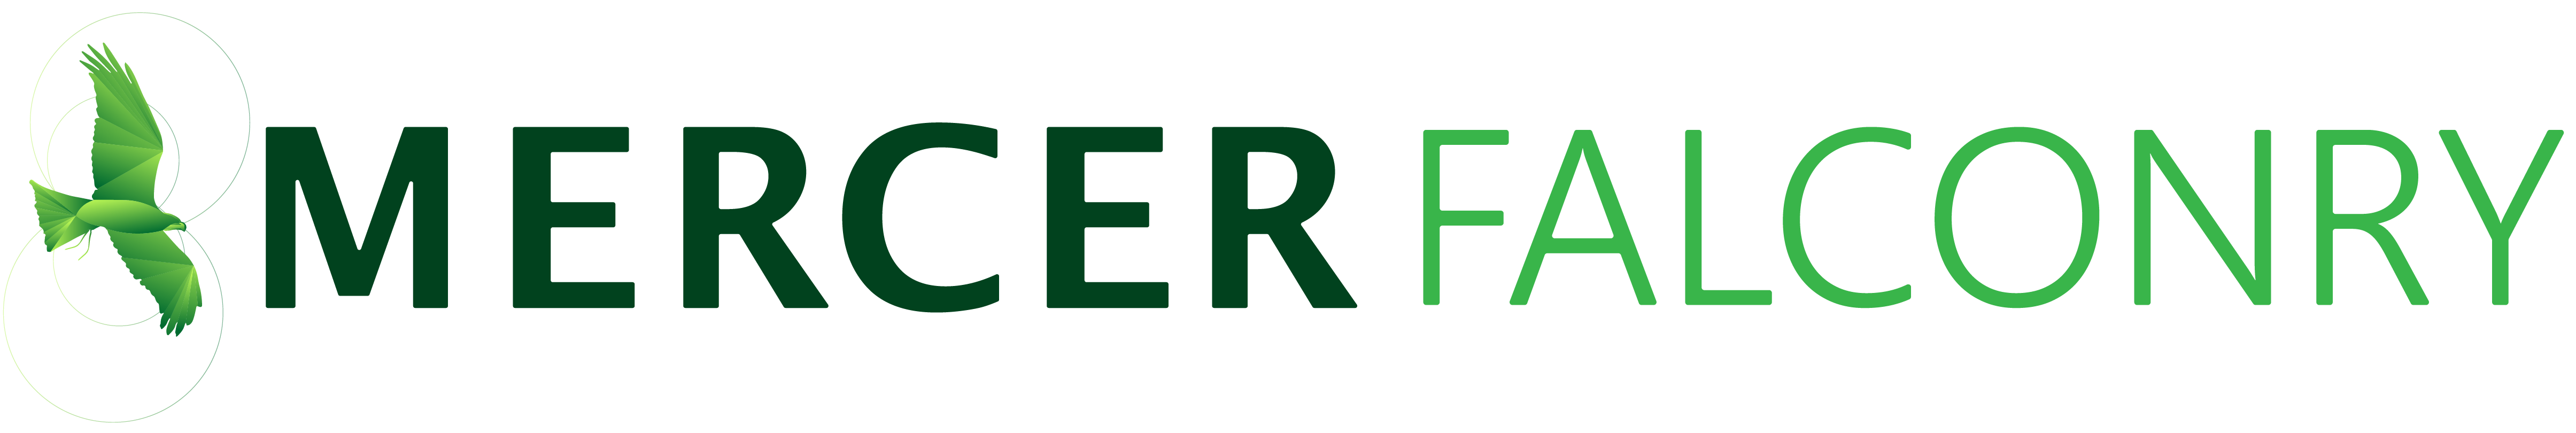 mercer falconry logo